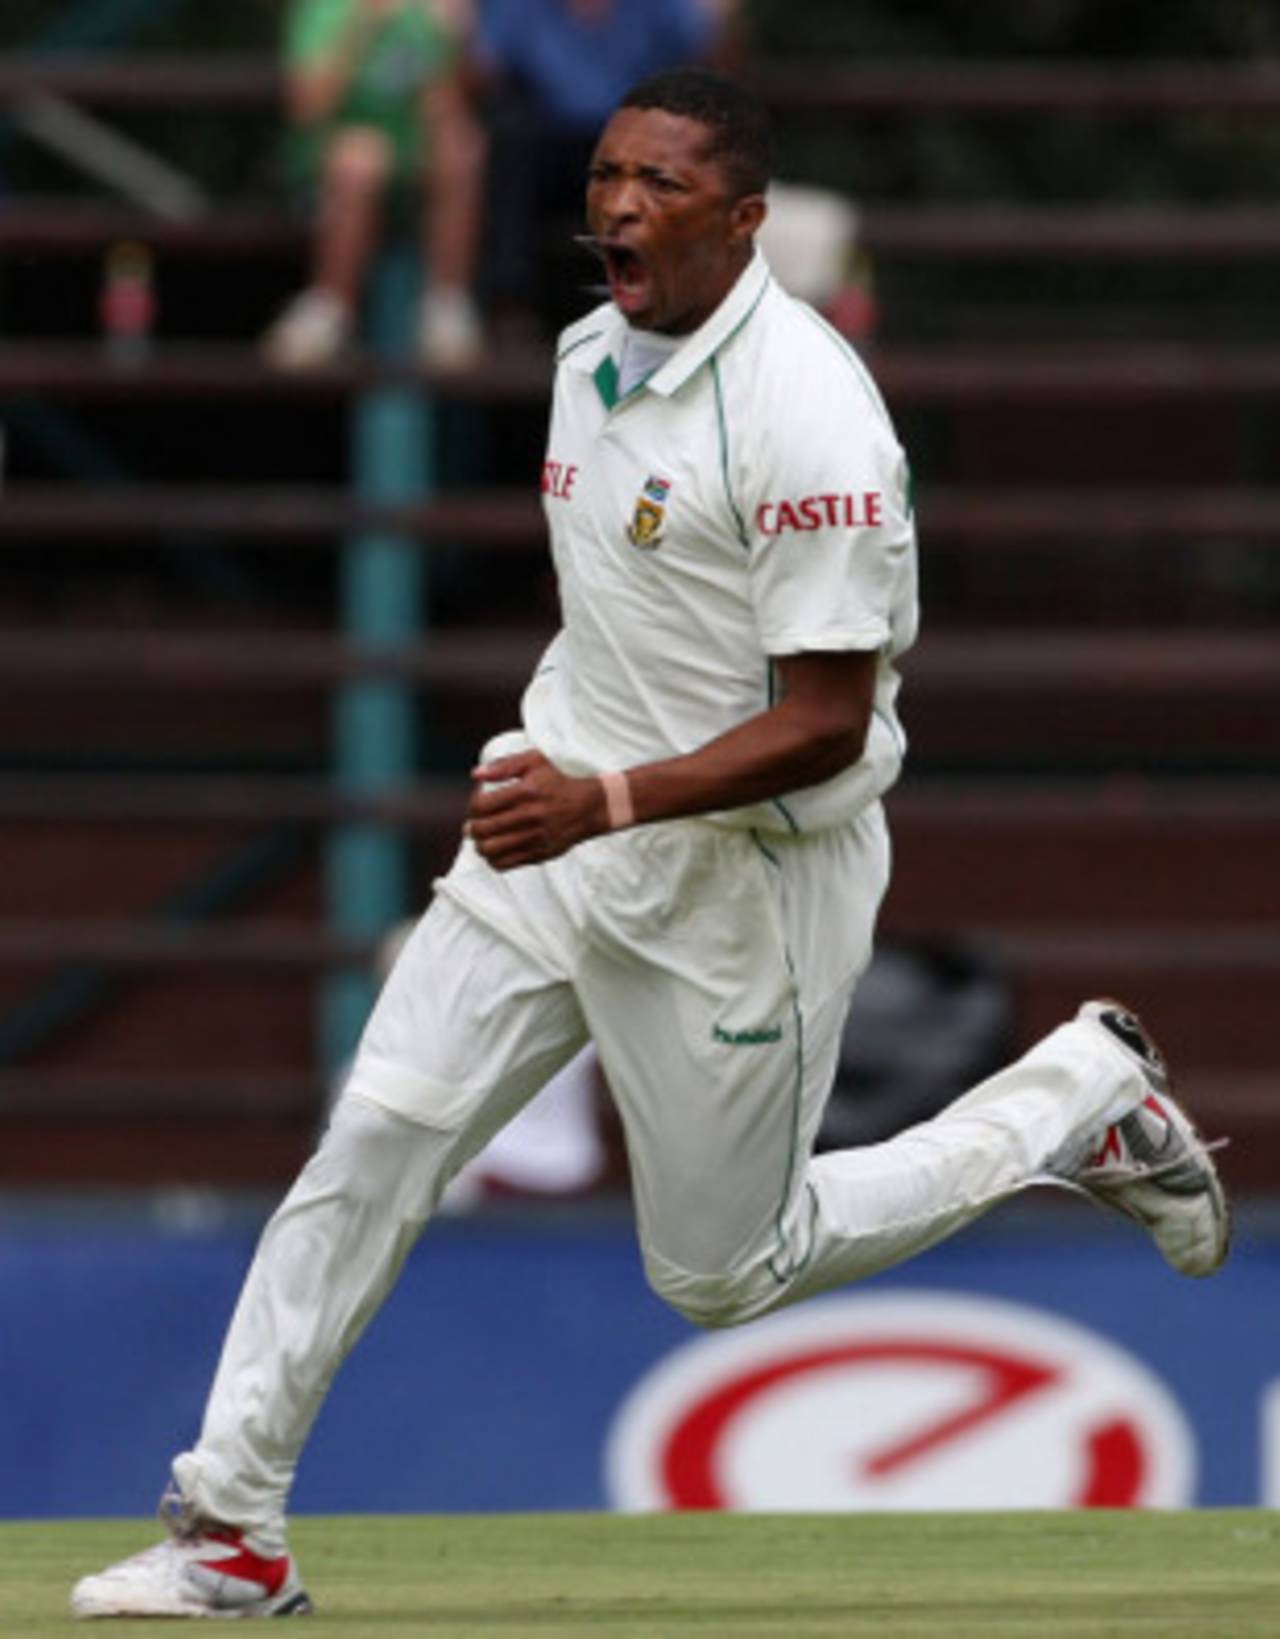 A jubilant Makhaya Ntini after dismissing Ricky Ponting, South Africa v Australia, 1st Test, Johannesburg, 1st day, February 26, 2009